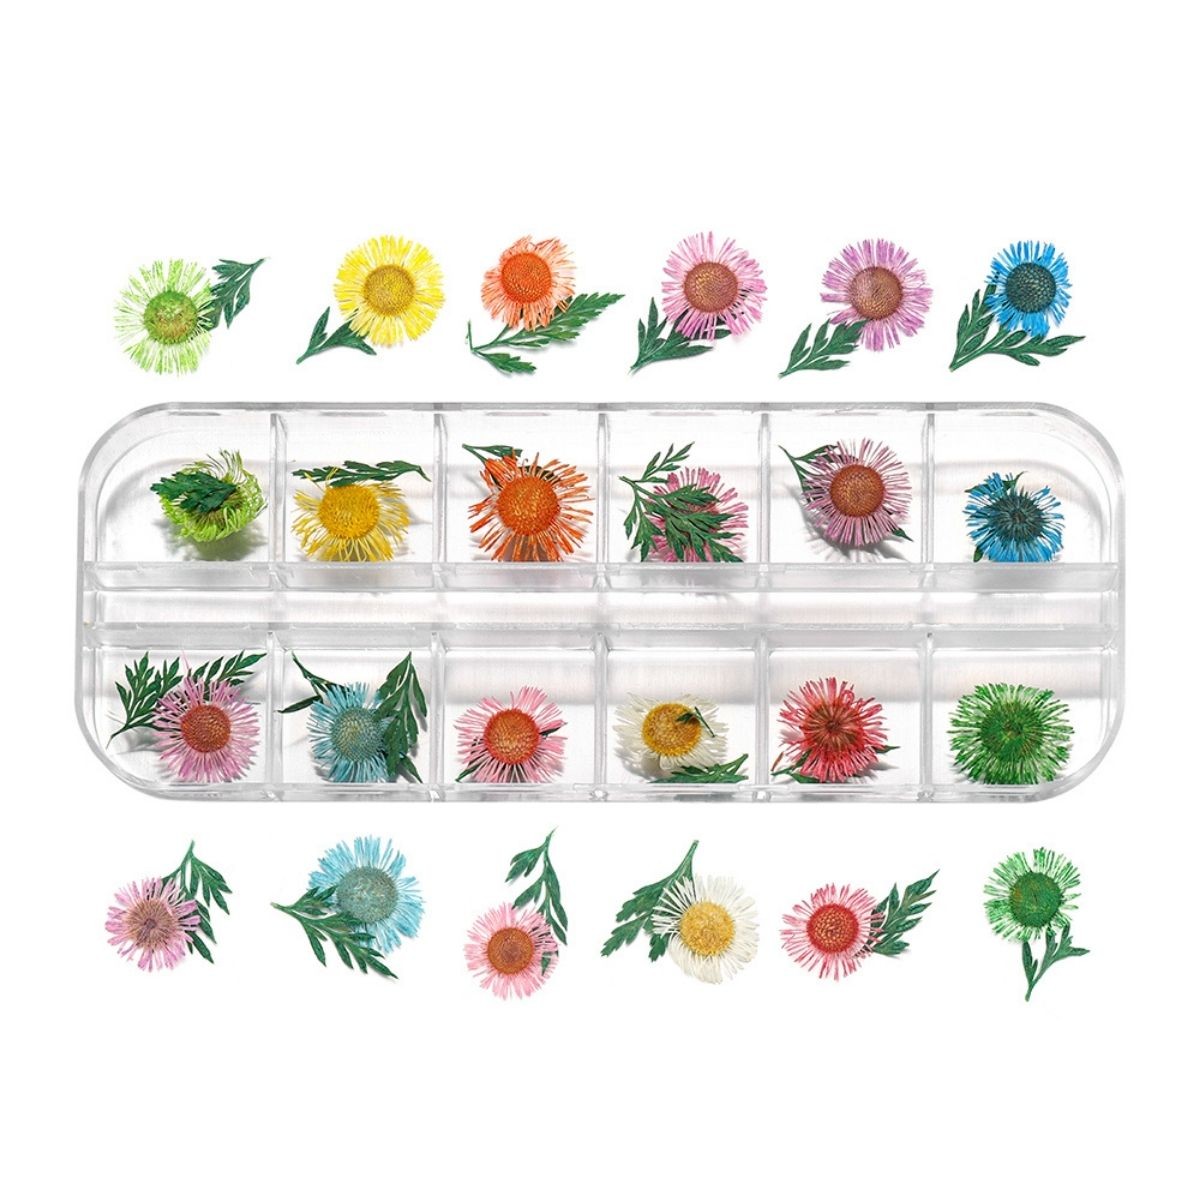 Nadel-Chrysanthemen in 12 Farben